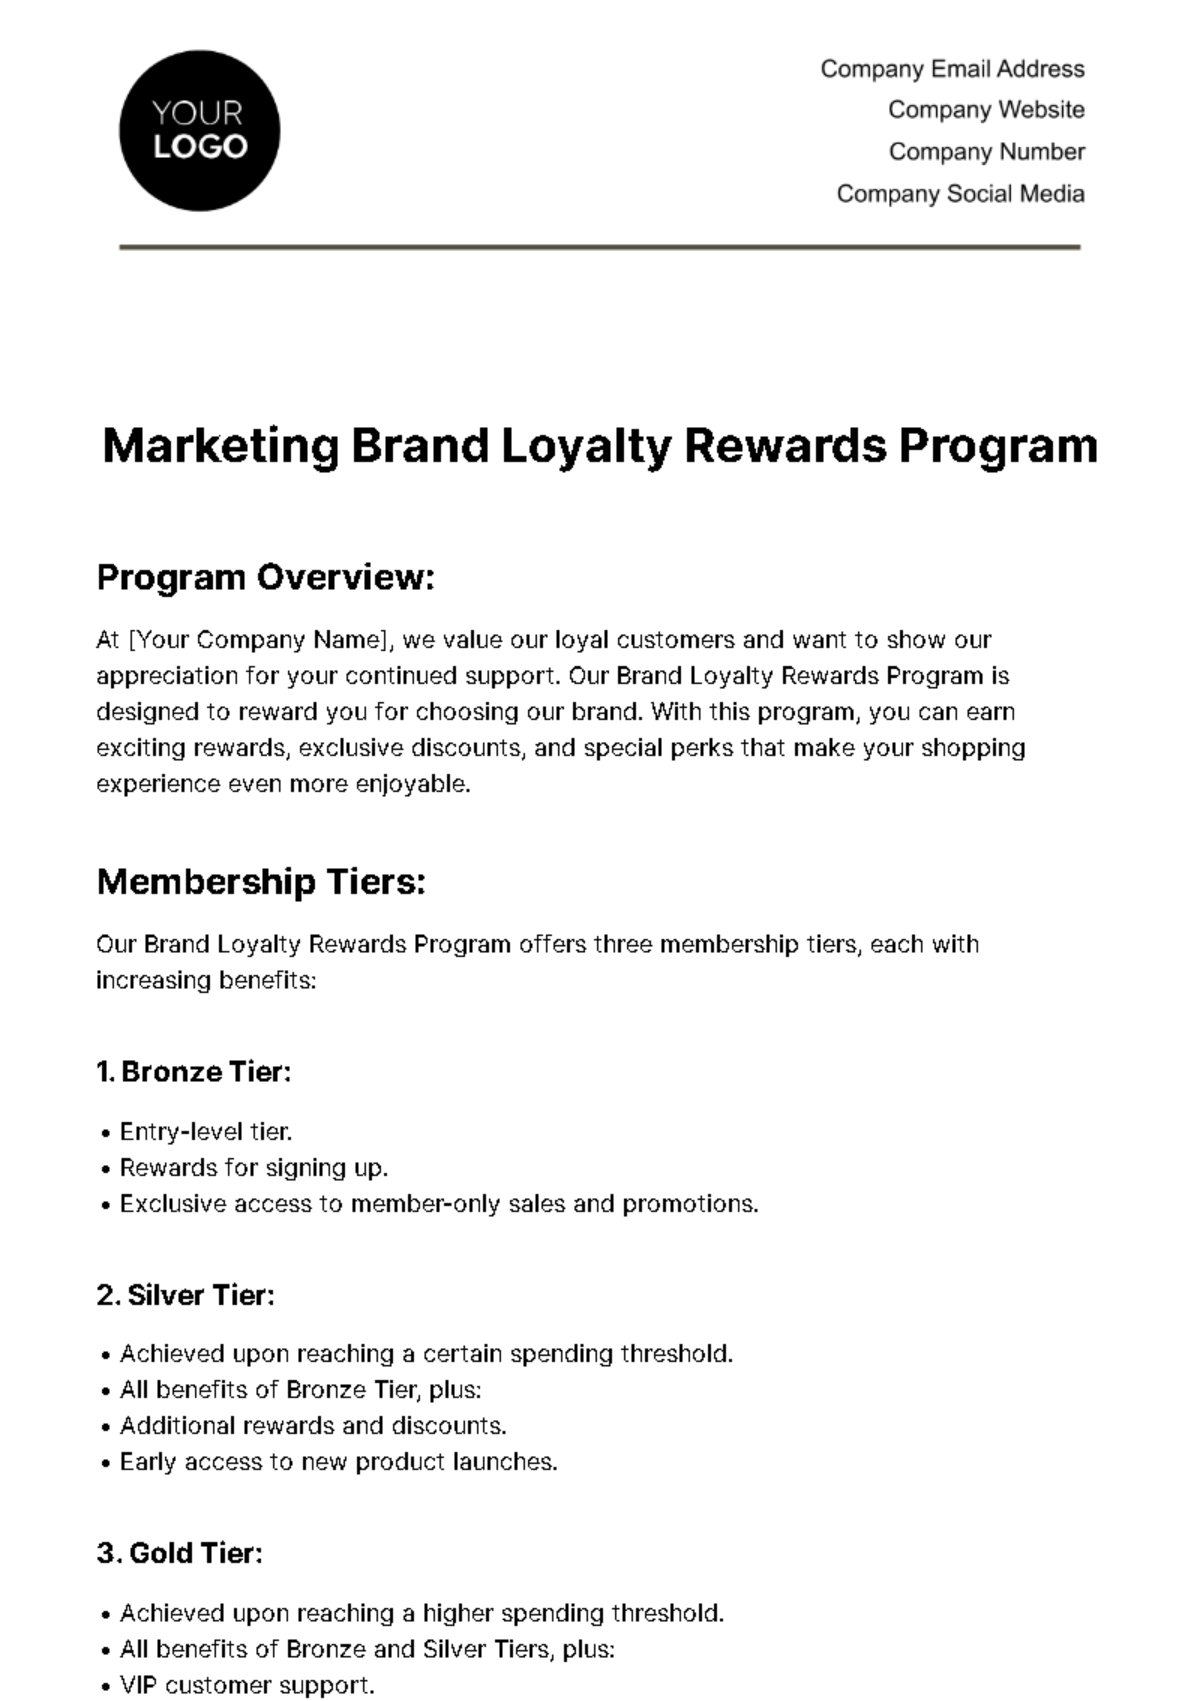 Free Marketing Brand Loyalty Rewards Program Template